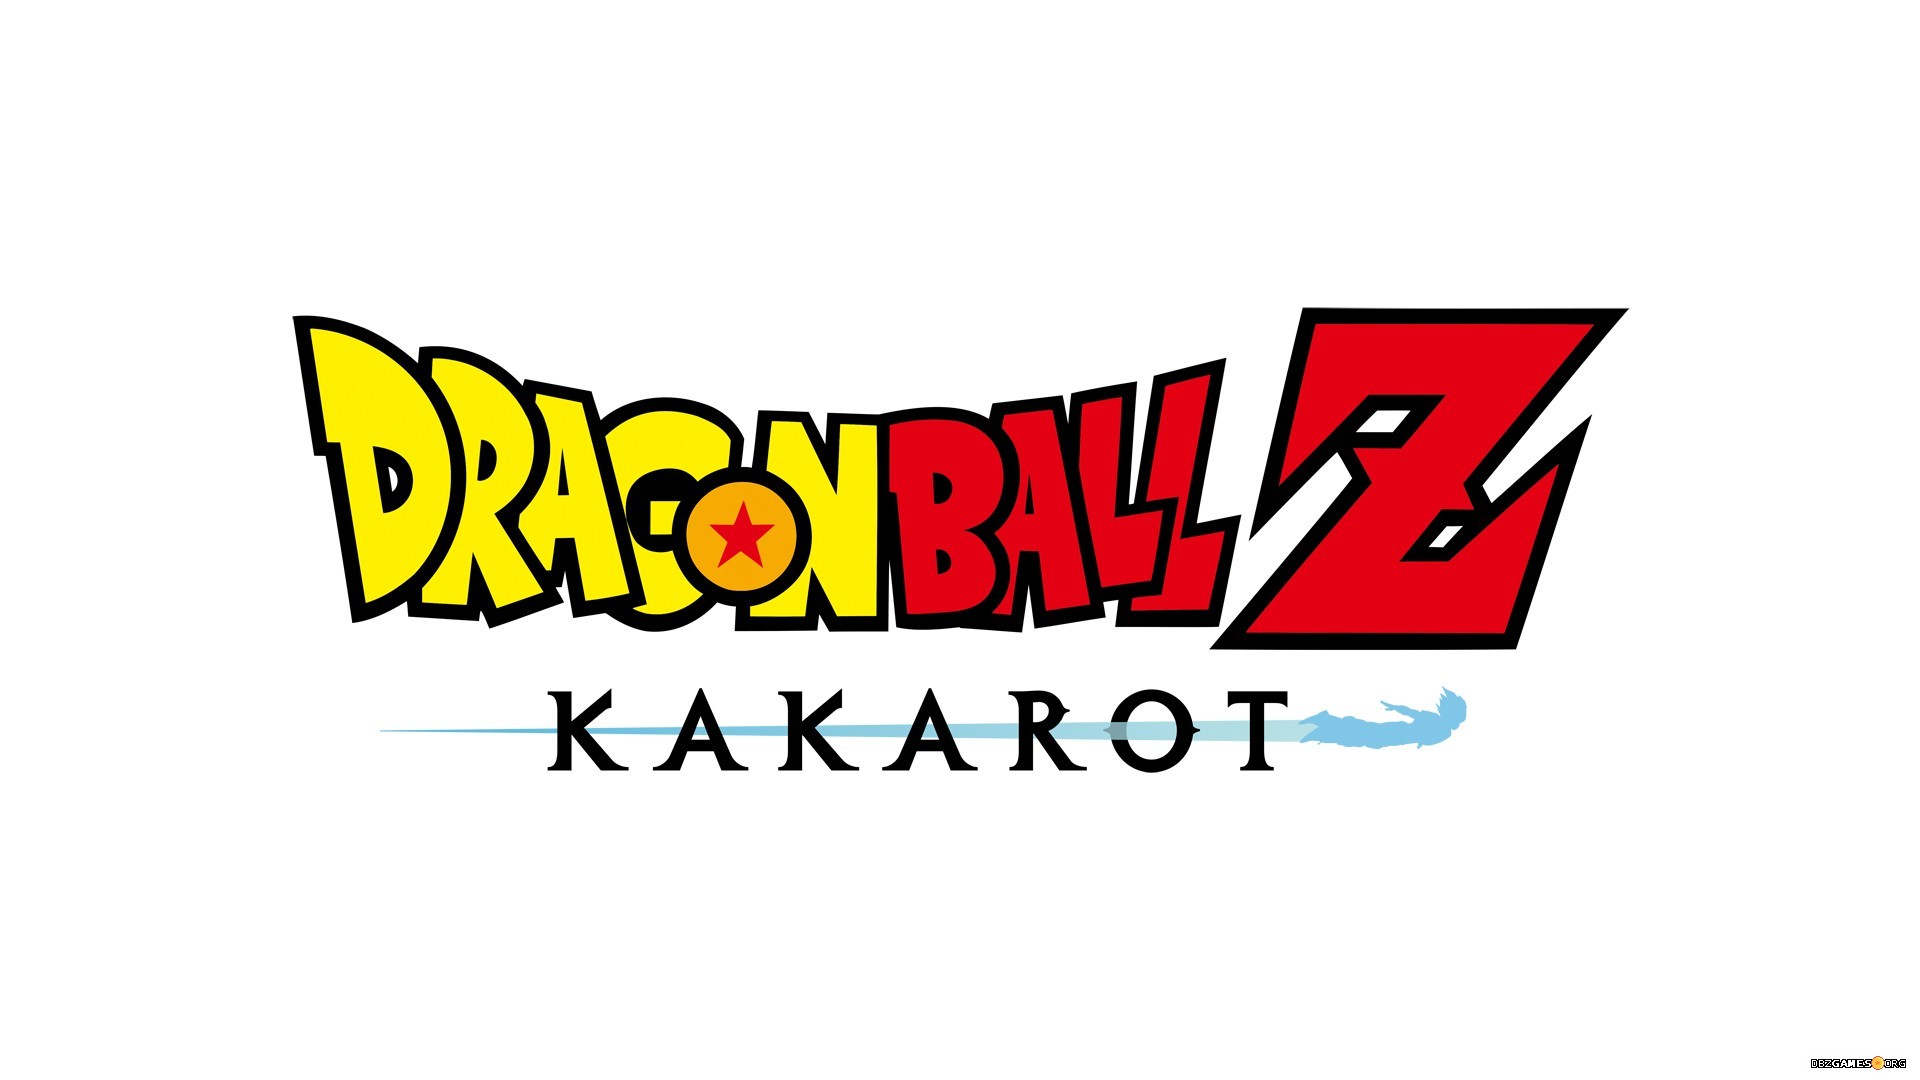 Dragon Ball Z: Kakarot Logo